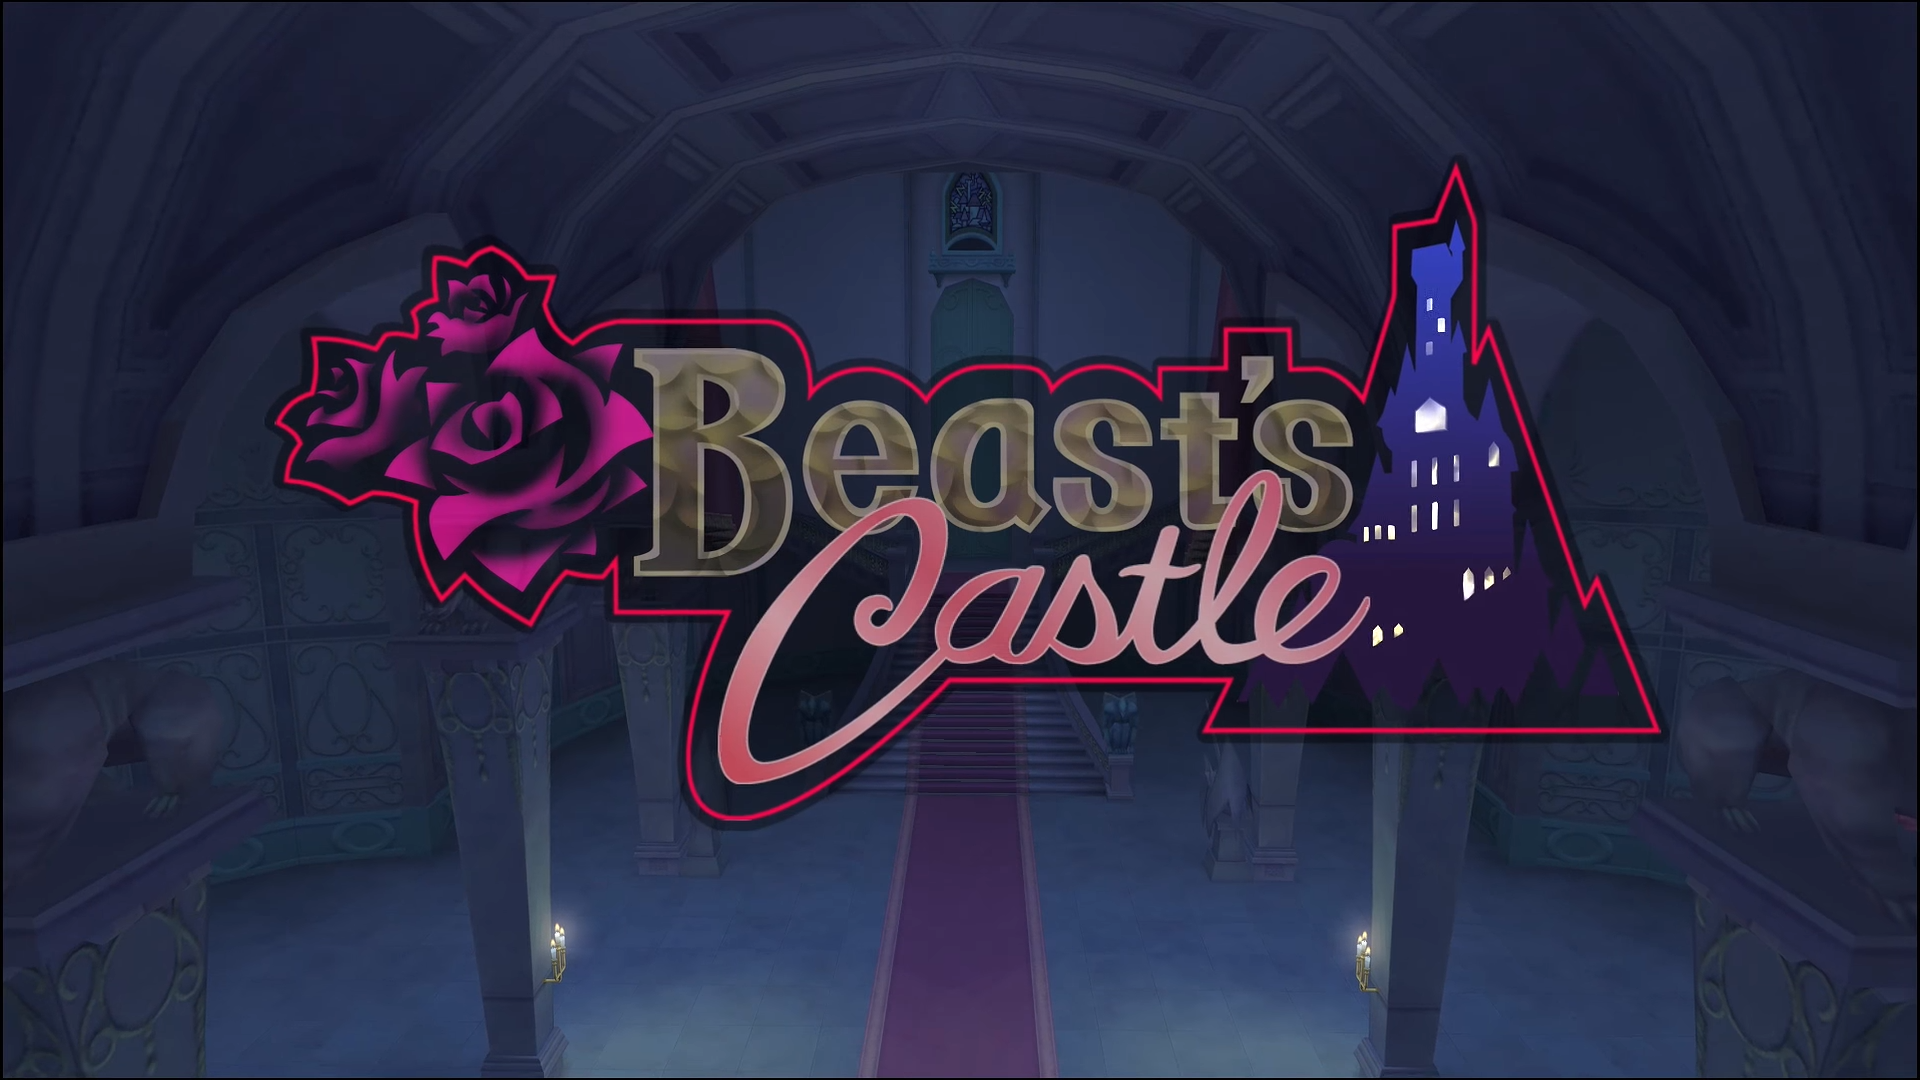 "Kingdom Hearts II". 2007. Square Enix. Disney. Beast's Castle title card.